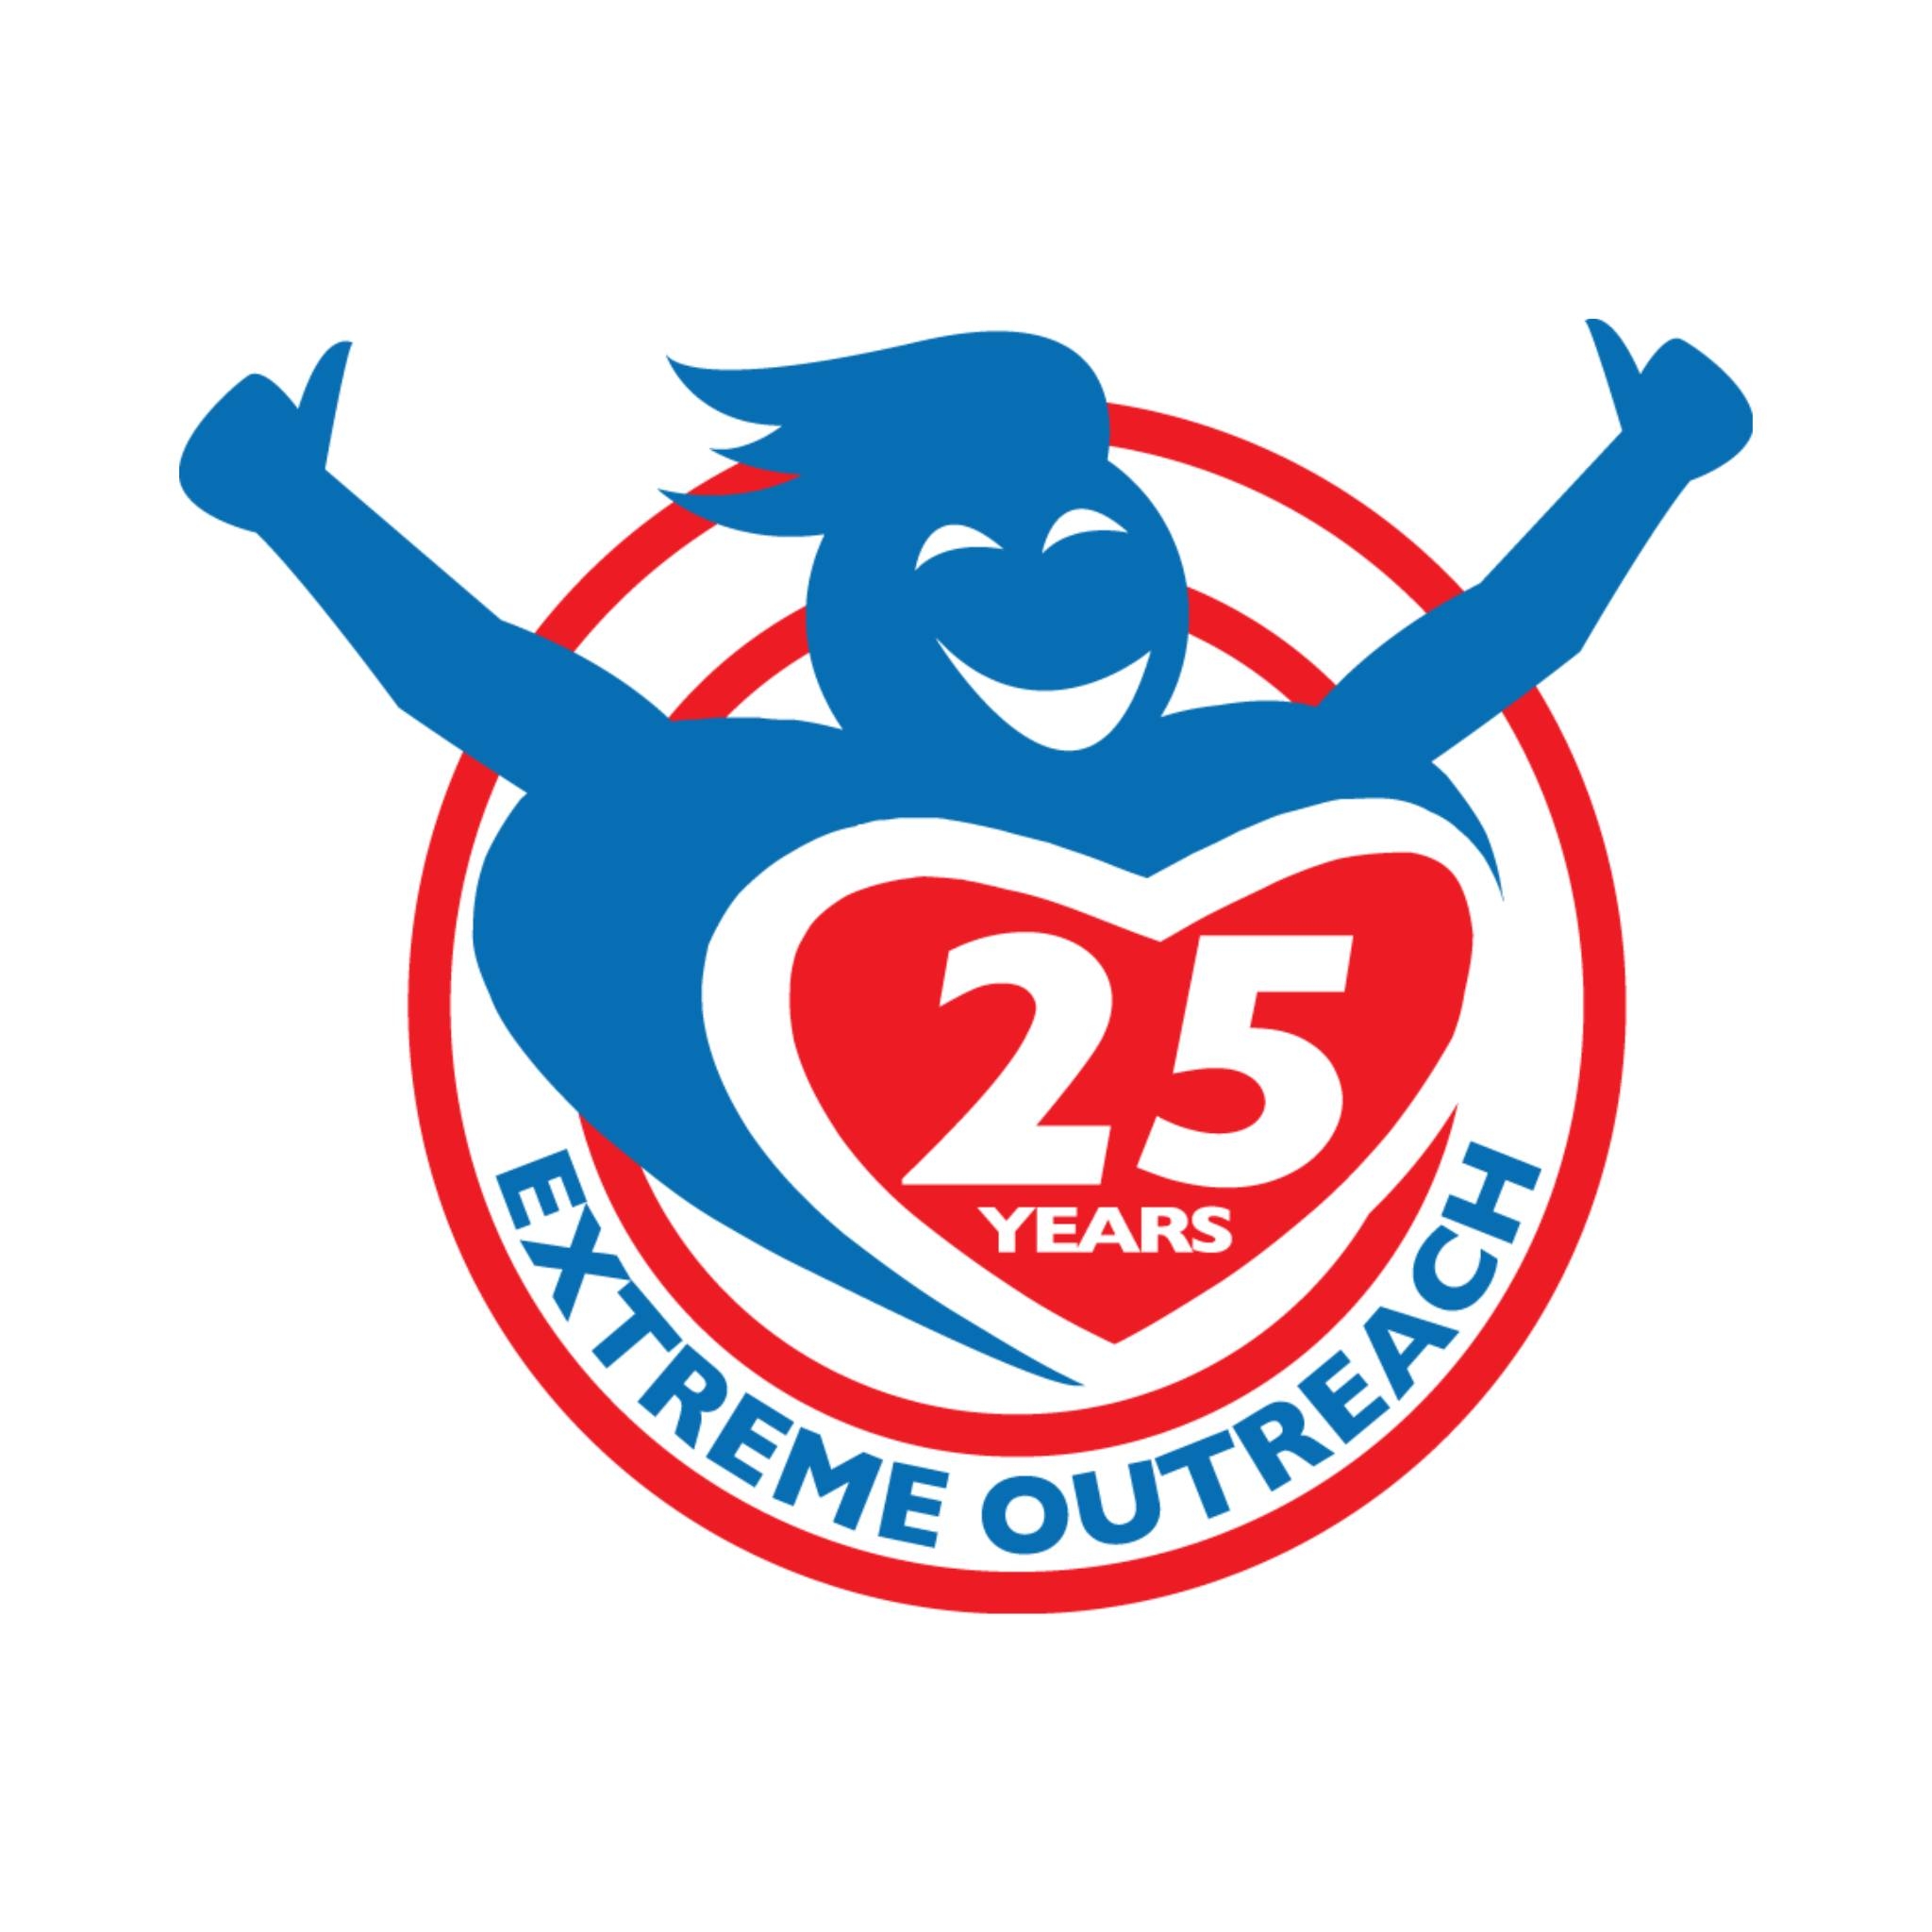 Extreme Outreach Society Logo